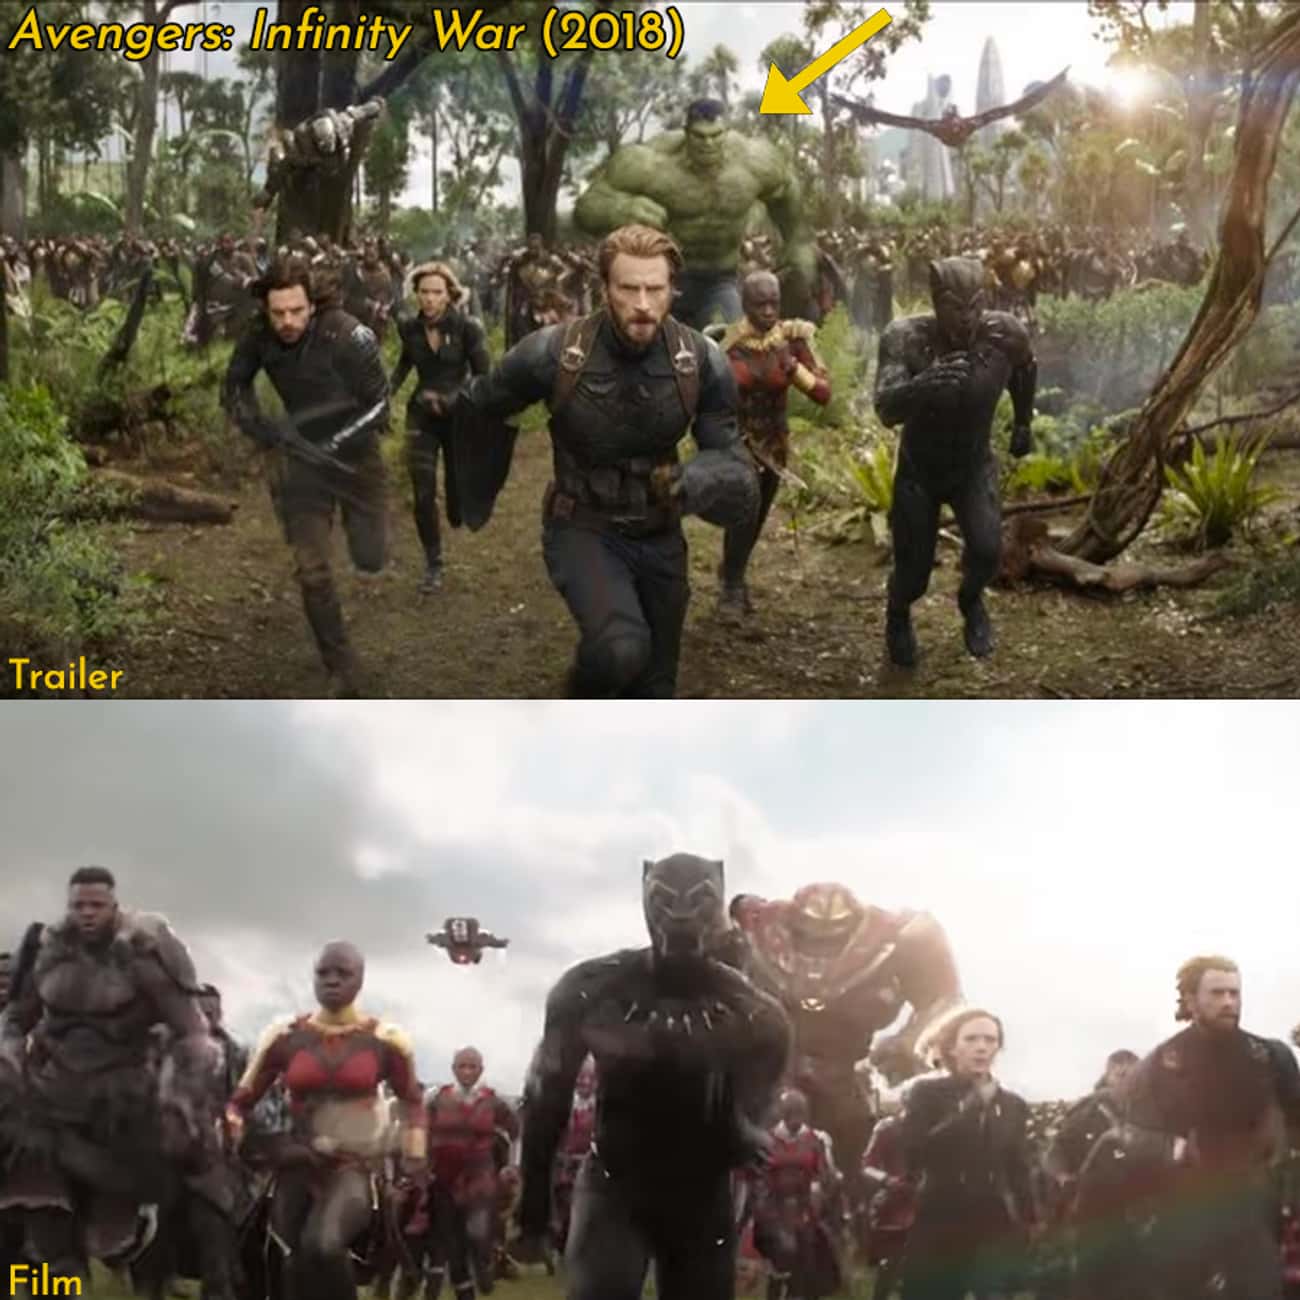 The Running Into Battle Shot From 'Avengers: Infinity War'